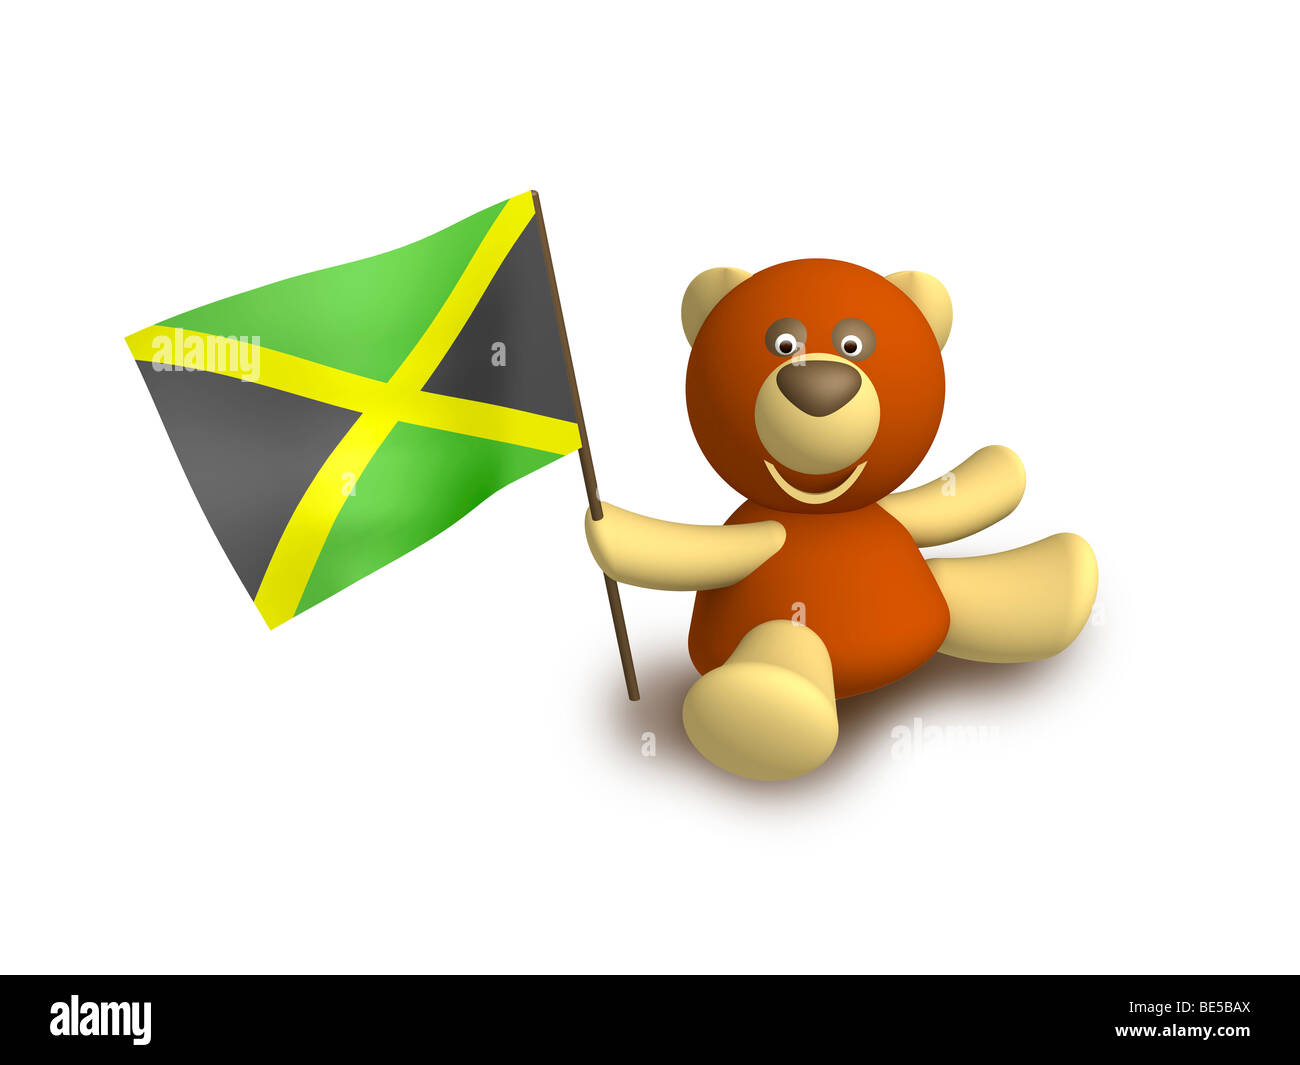 Jamaica flag Stock Photo